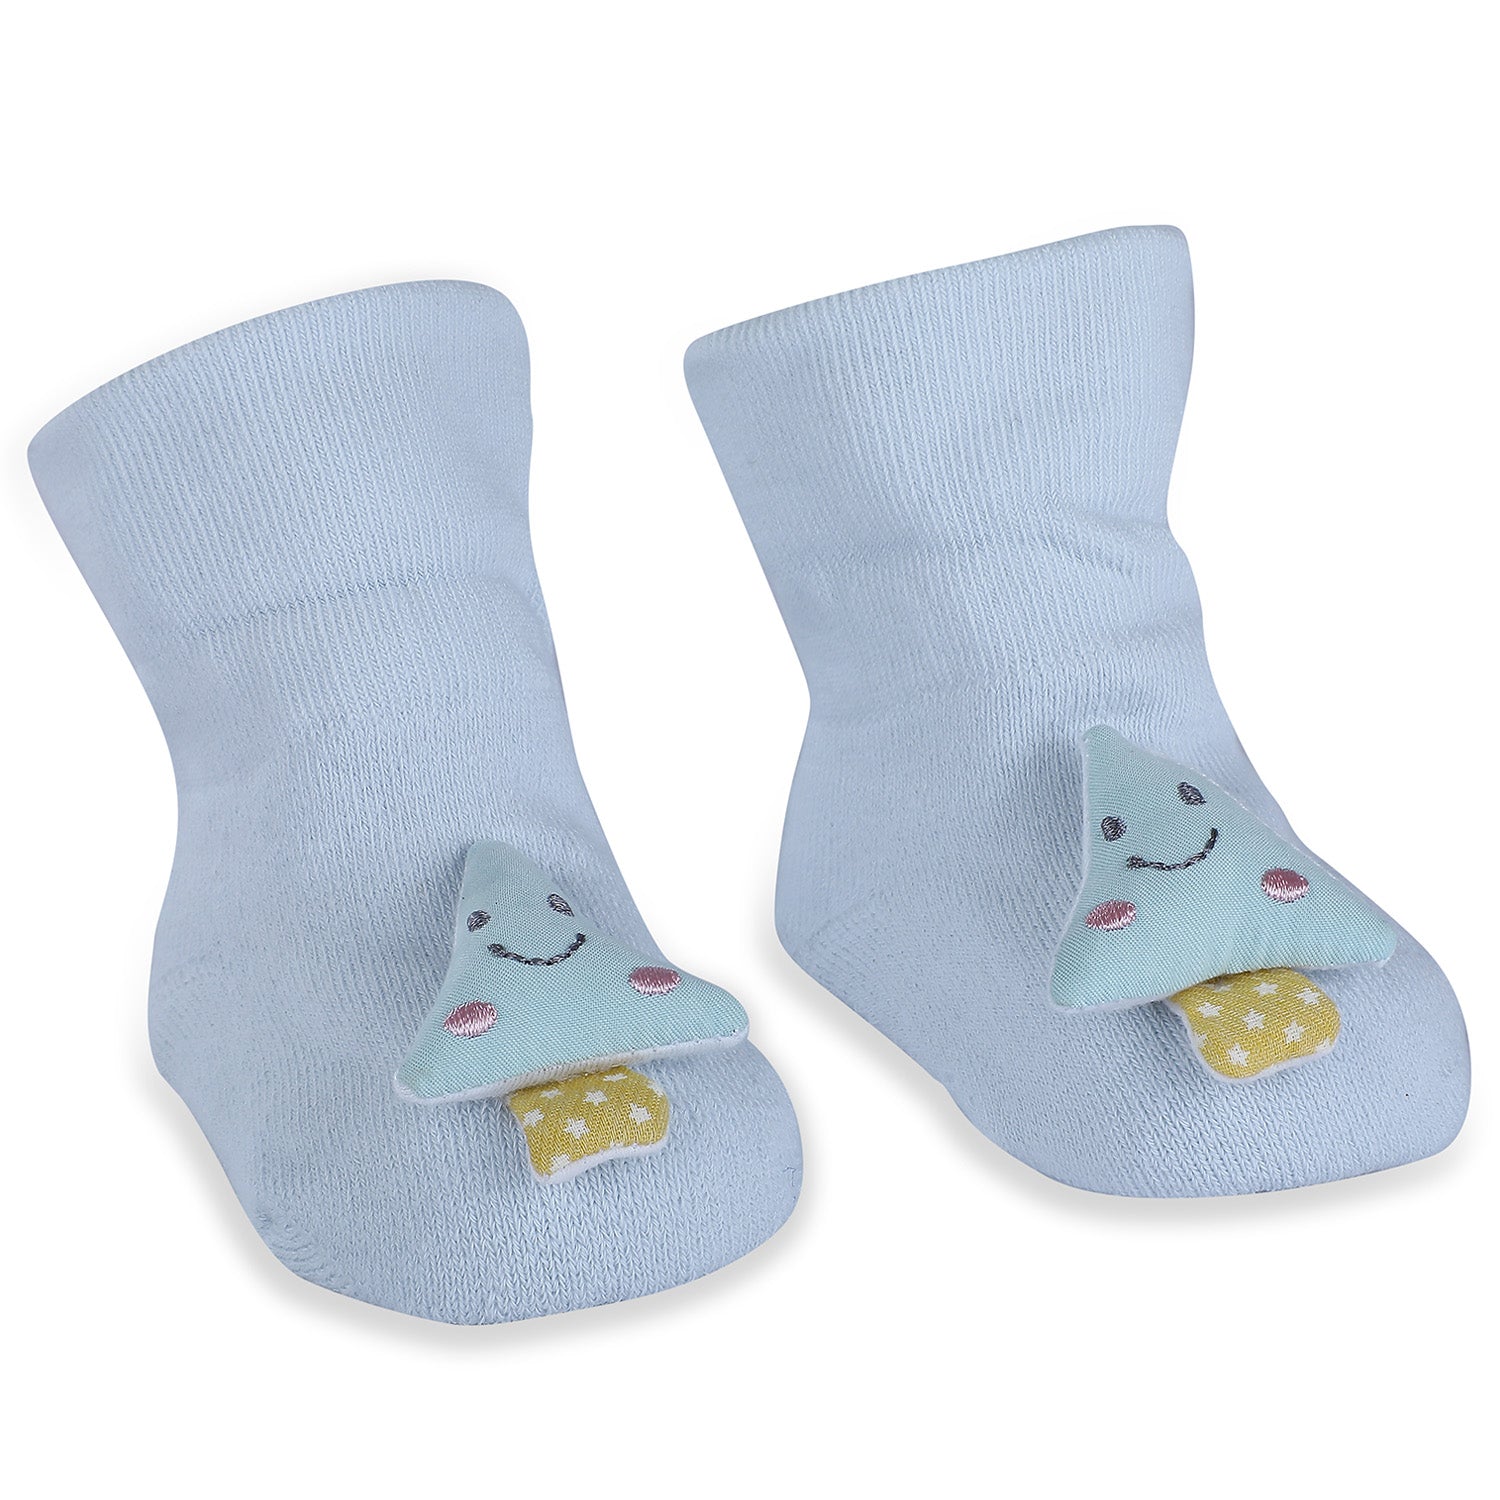 Baby Moo Smiling Tree Cotton Anti-Skid 3D Socks - Blue